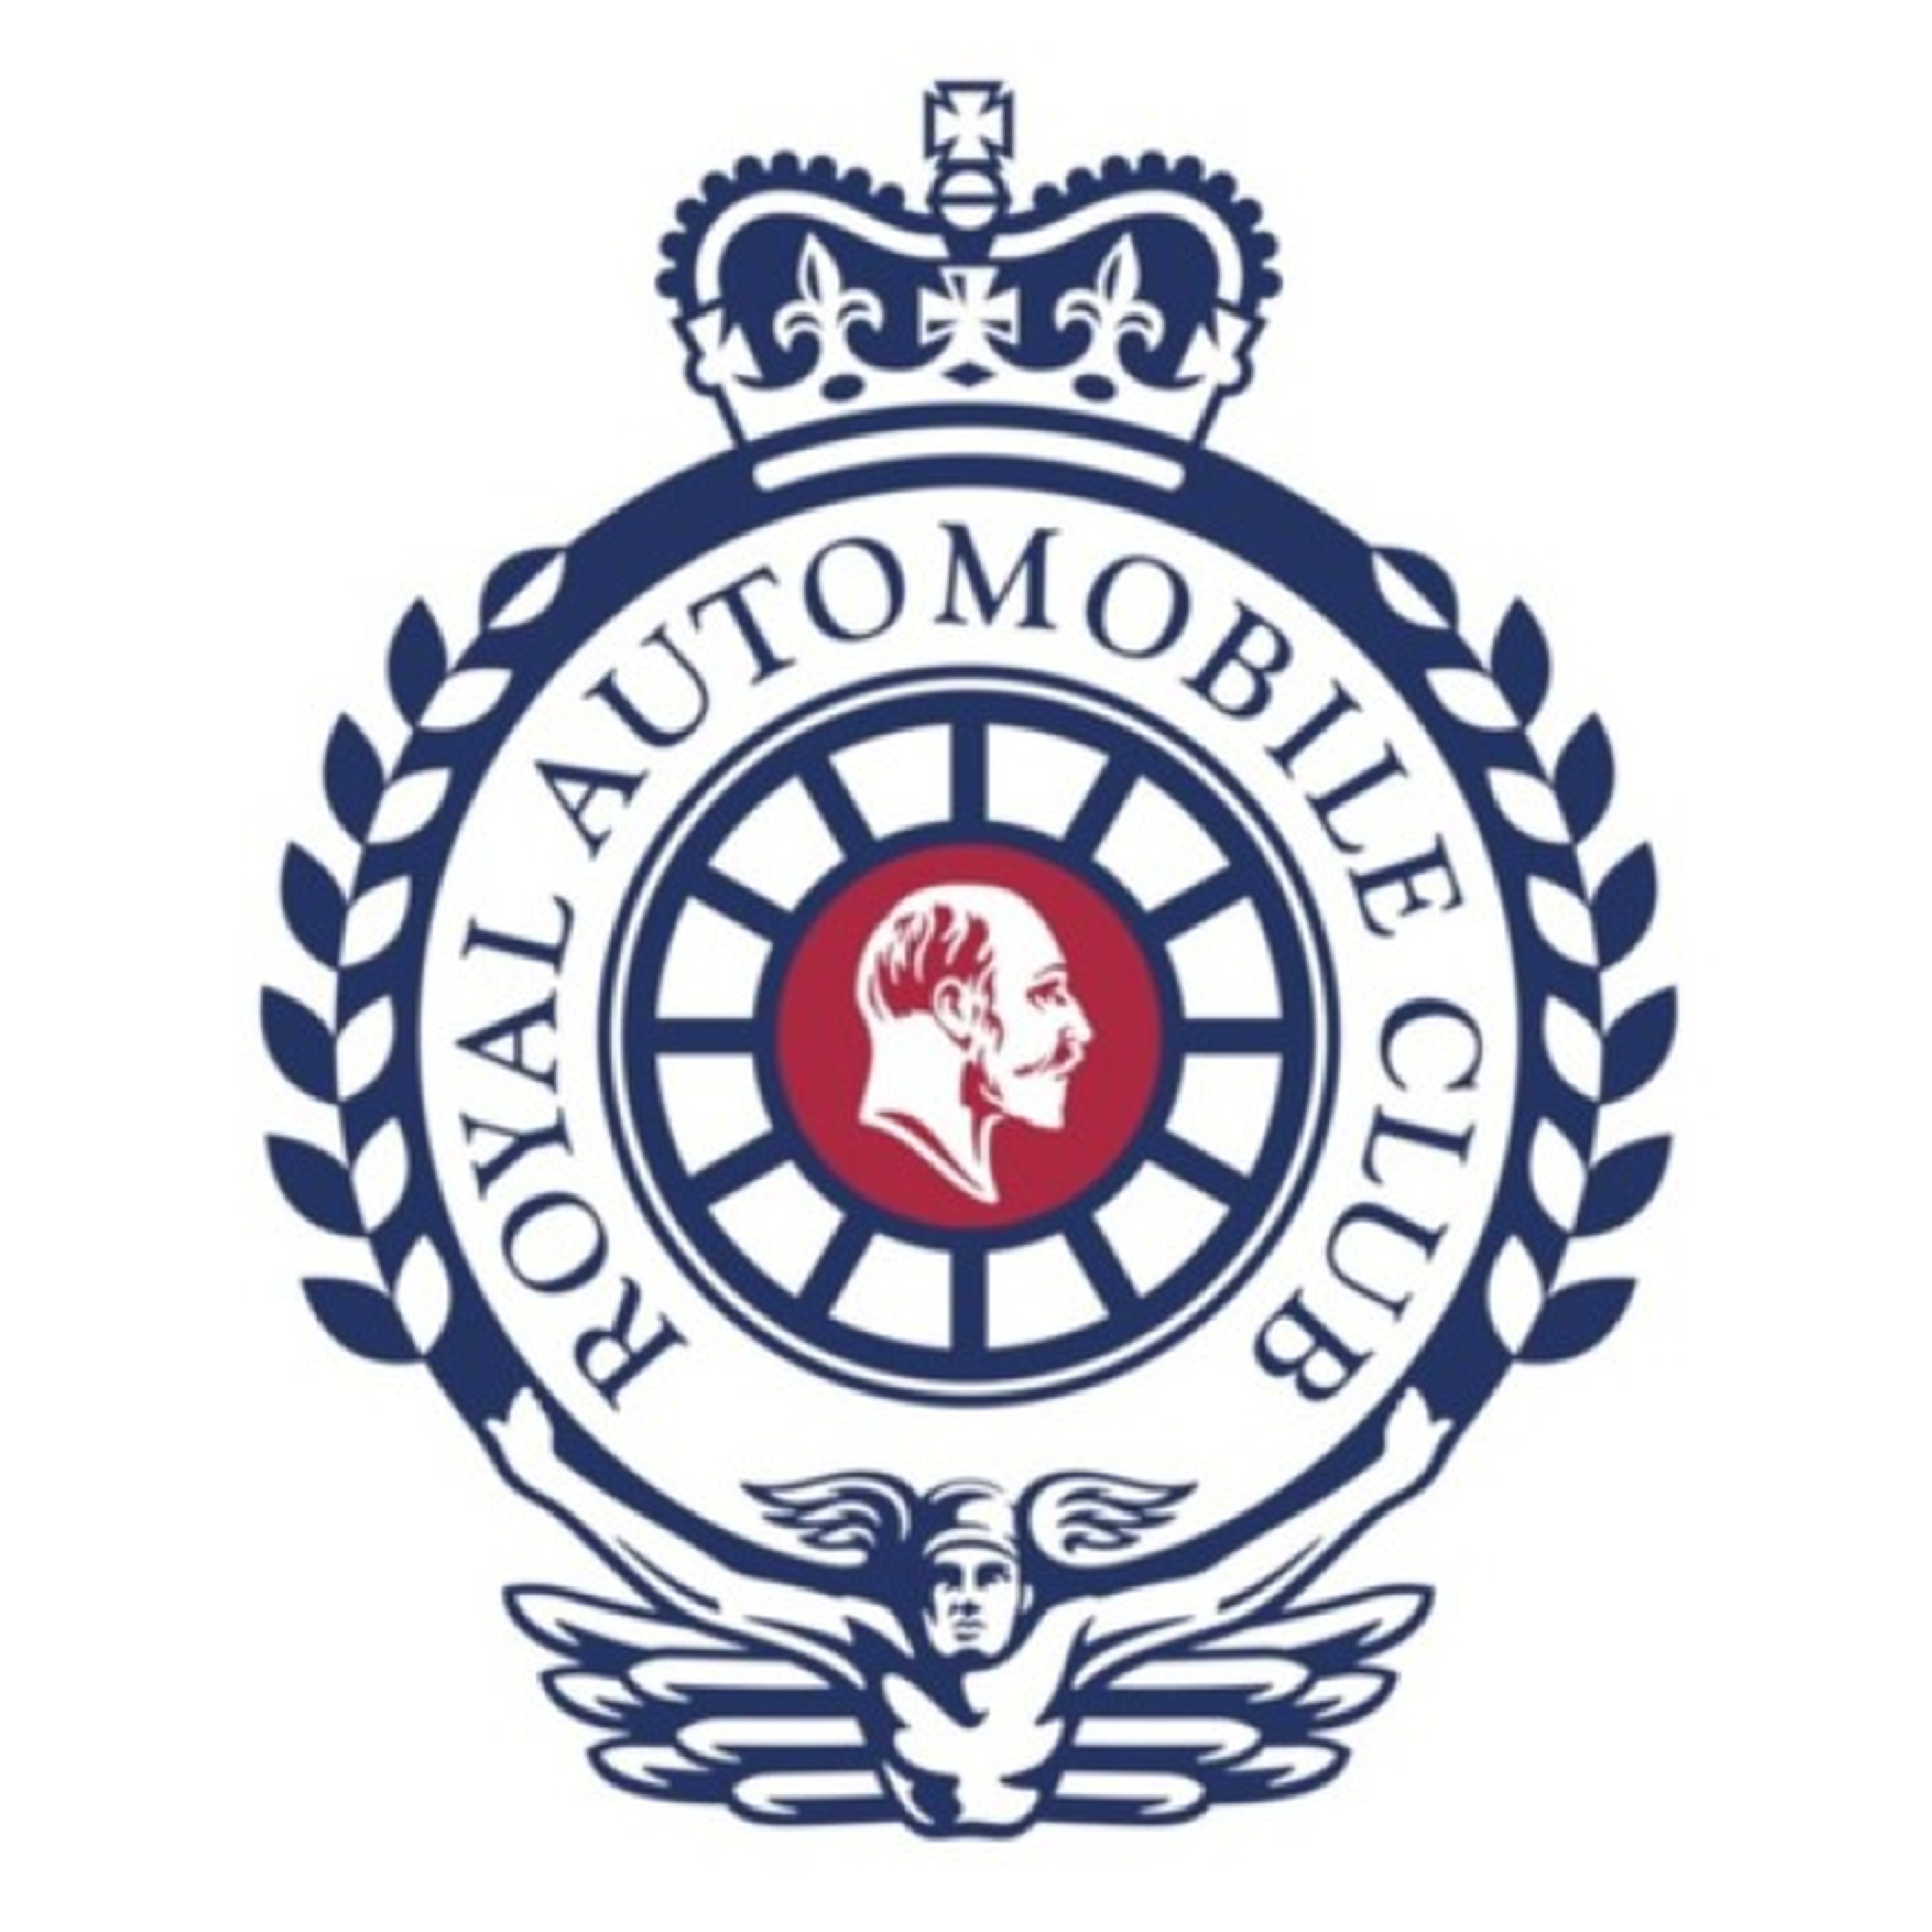 Rob Wilson: Royal Automobile Club Talk Show in association with Motor Sport